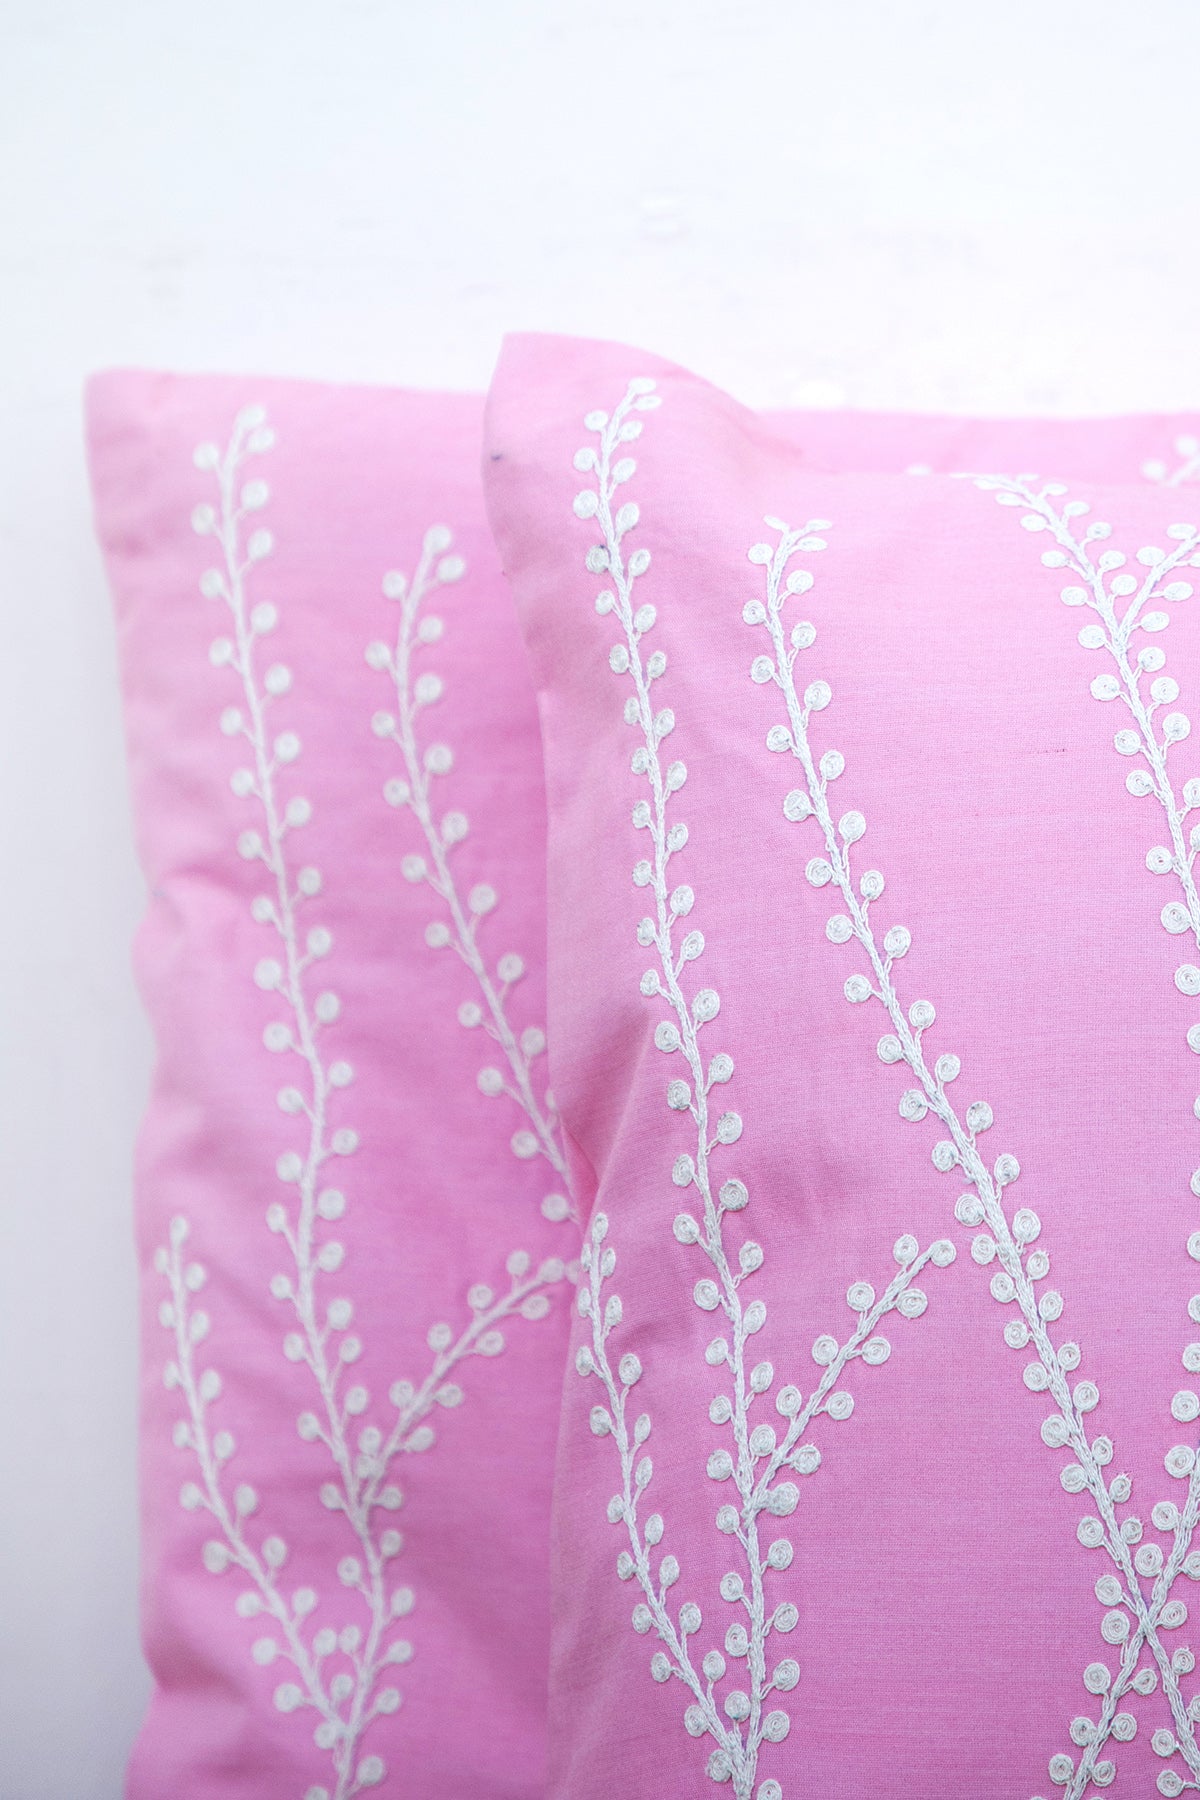 Pink Puff Cushion Set